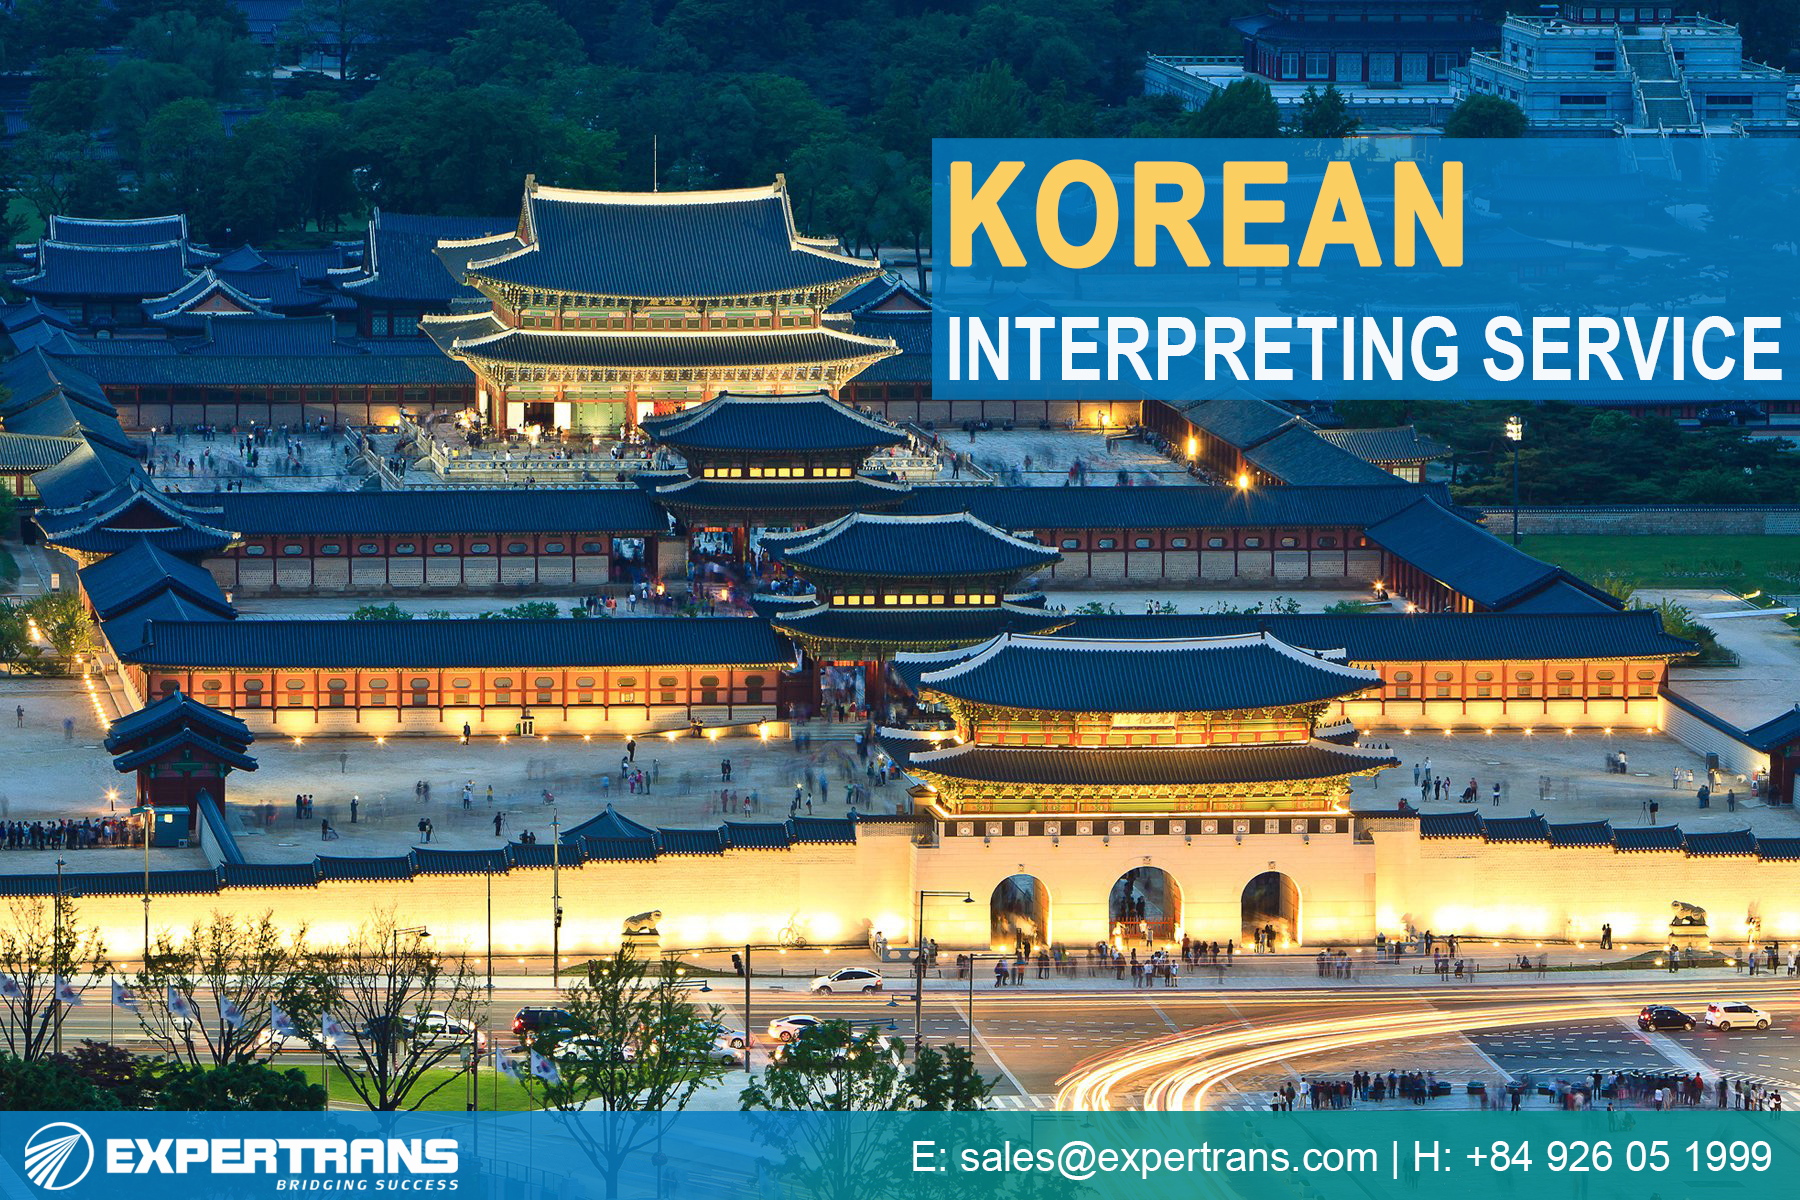 Korean Interpreting Service